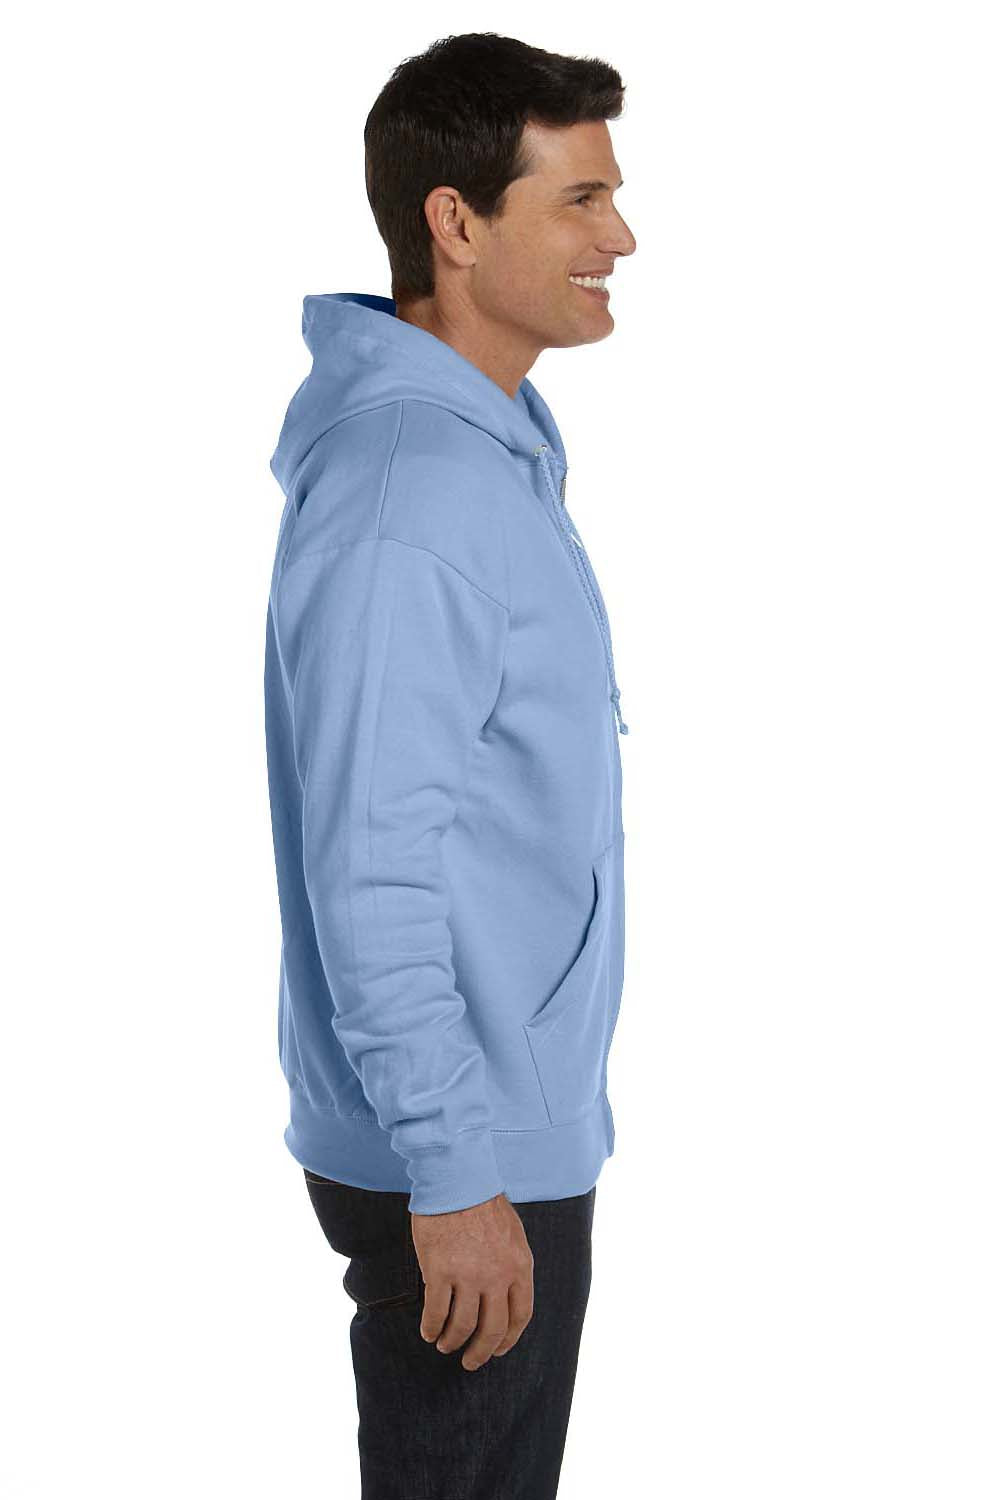 Hanes P180 Mens EcoSmart Print Pro XP Full Zip Hooded Sweatshirt Hoodie Light Blue Side